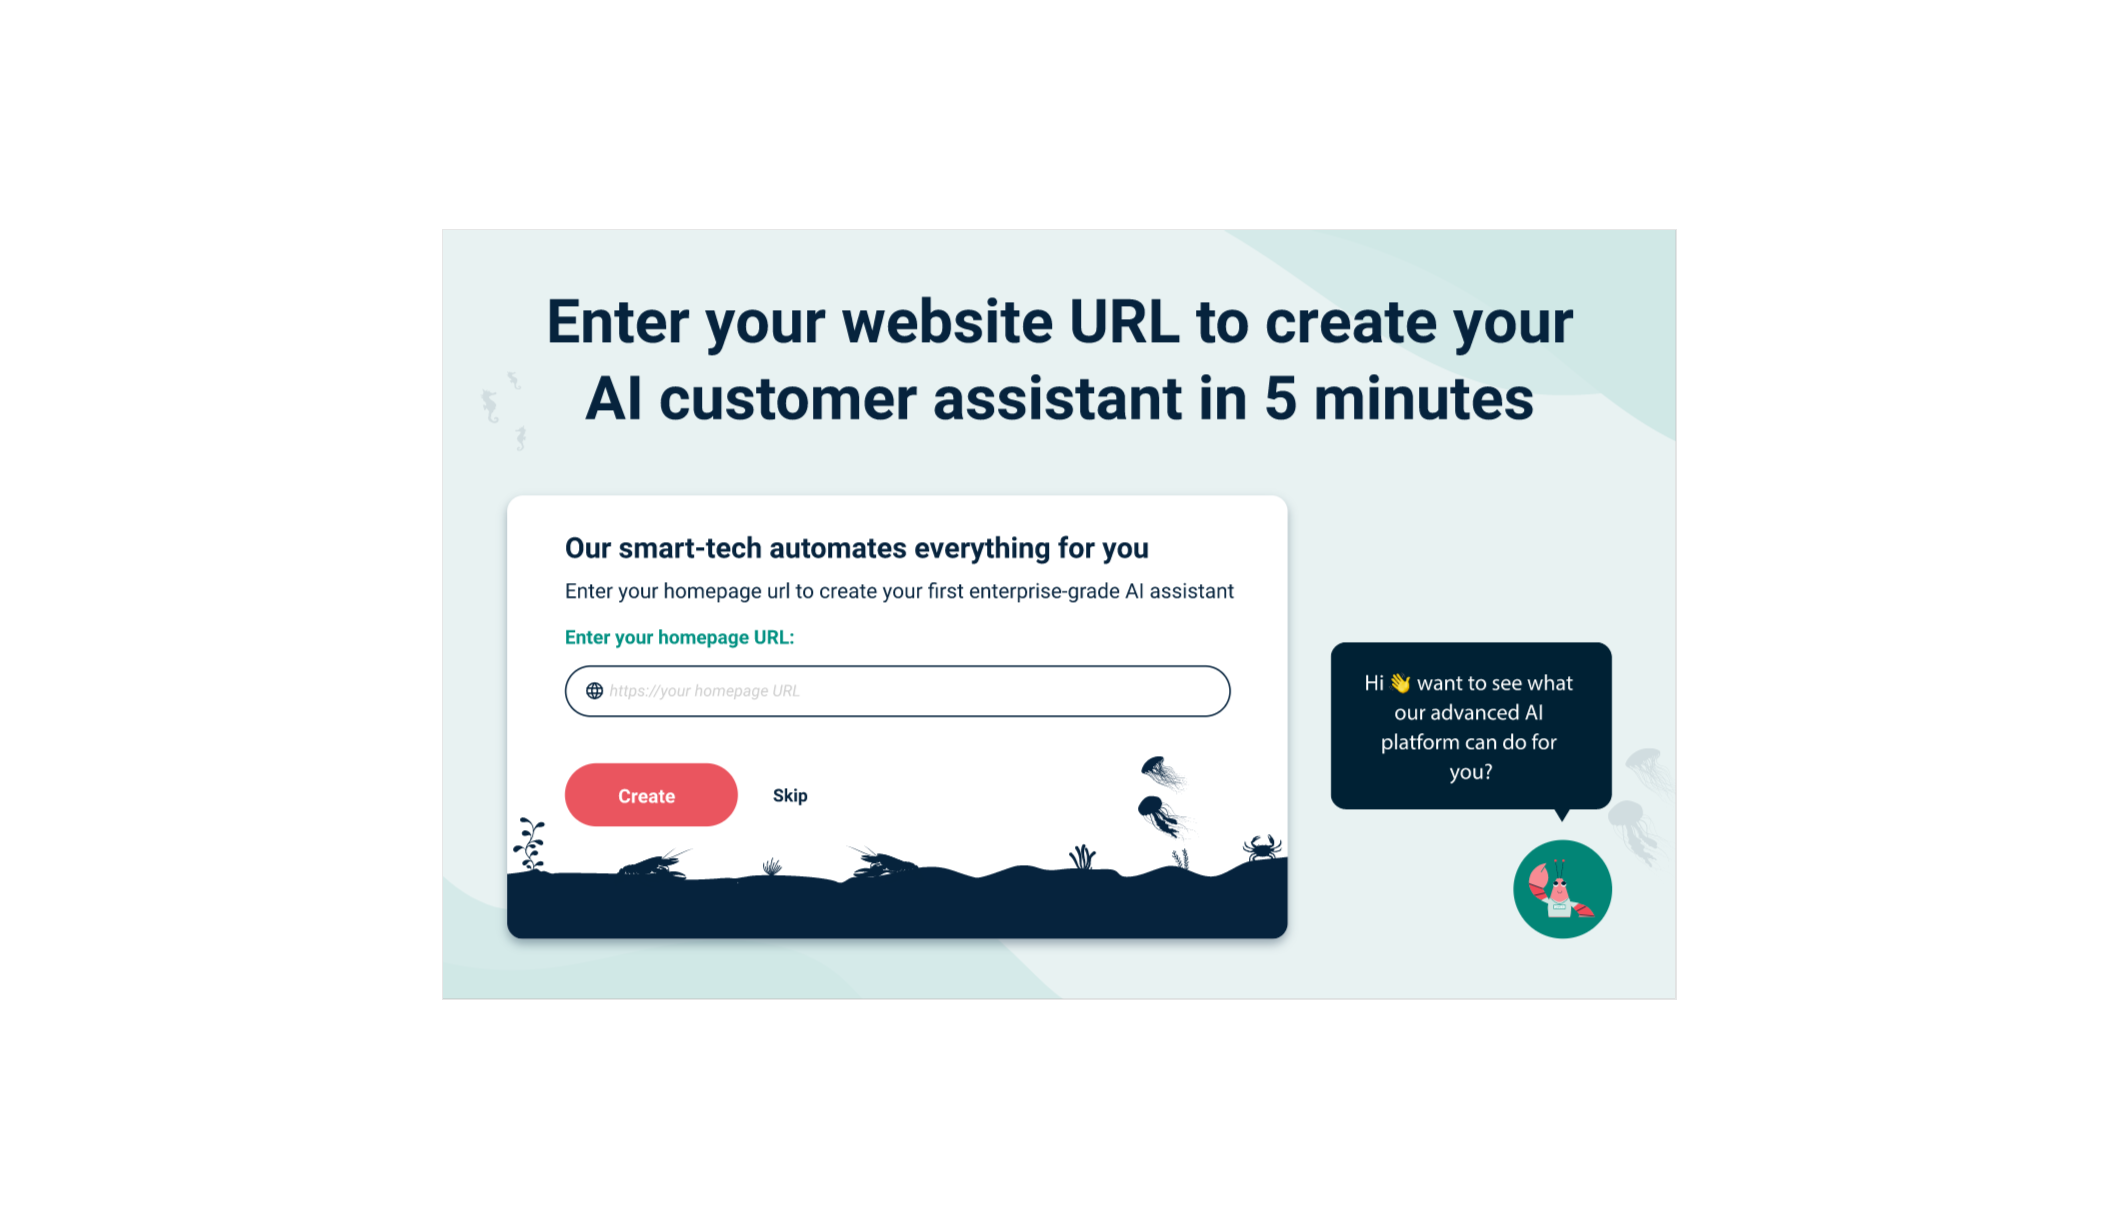 Enter website URL for AI in <5 min